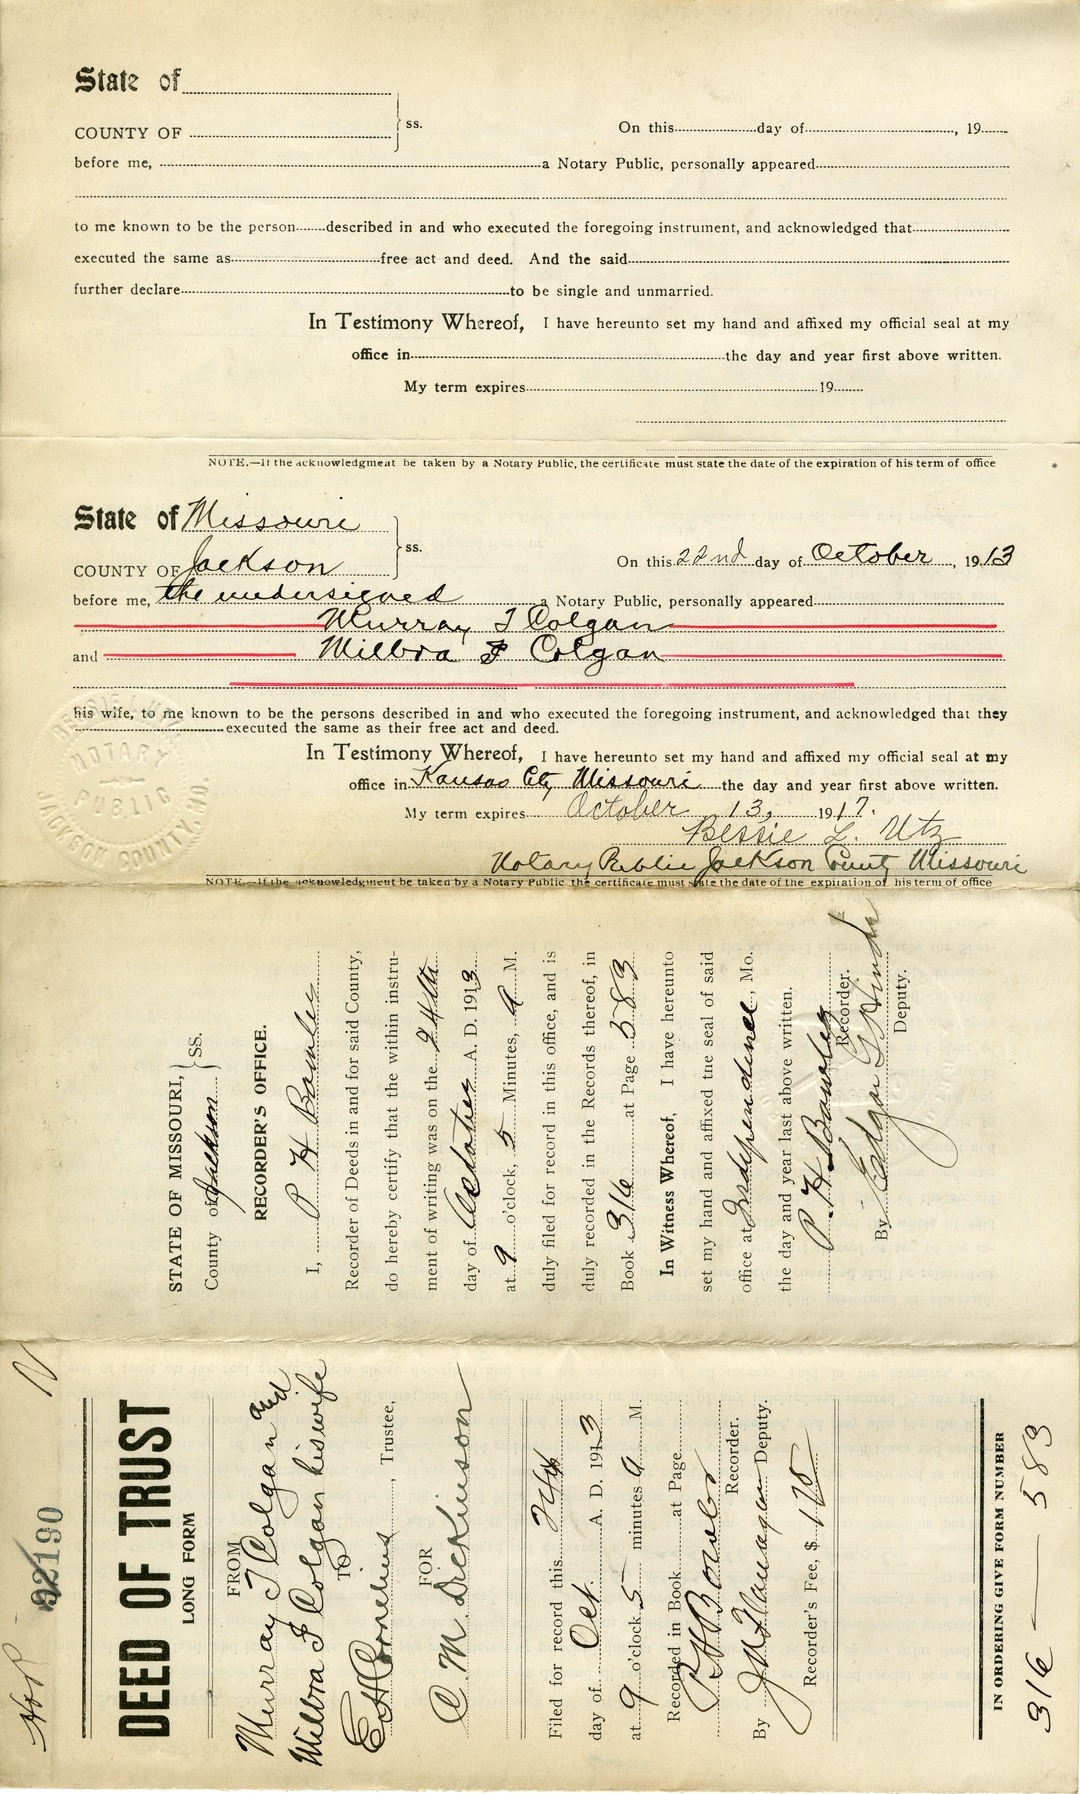 Deed of Trust from Murray T. Colgan and Milbra I. Colgan to E. H. Cornelius and C. M. Dickinson